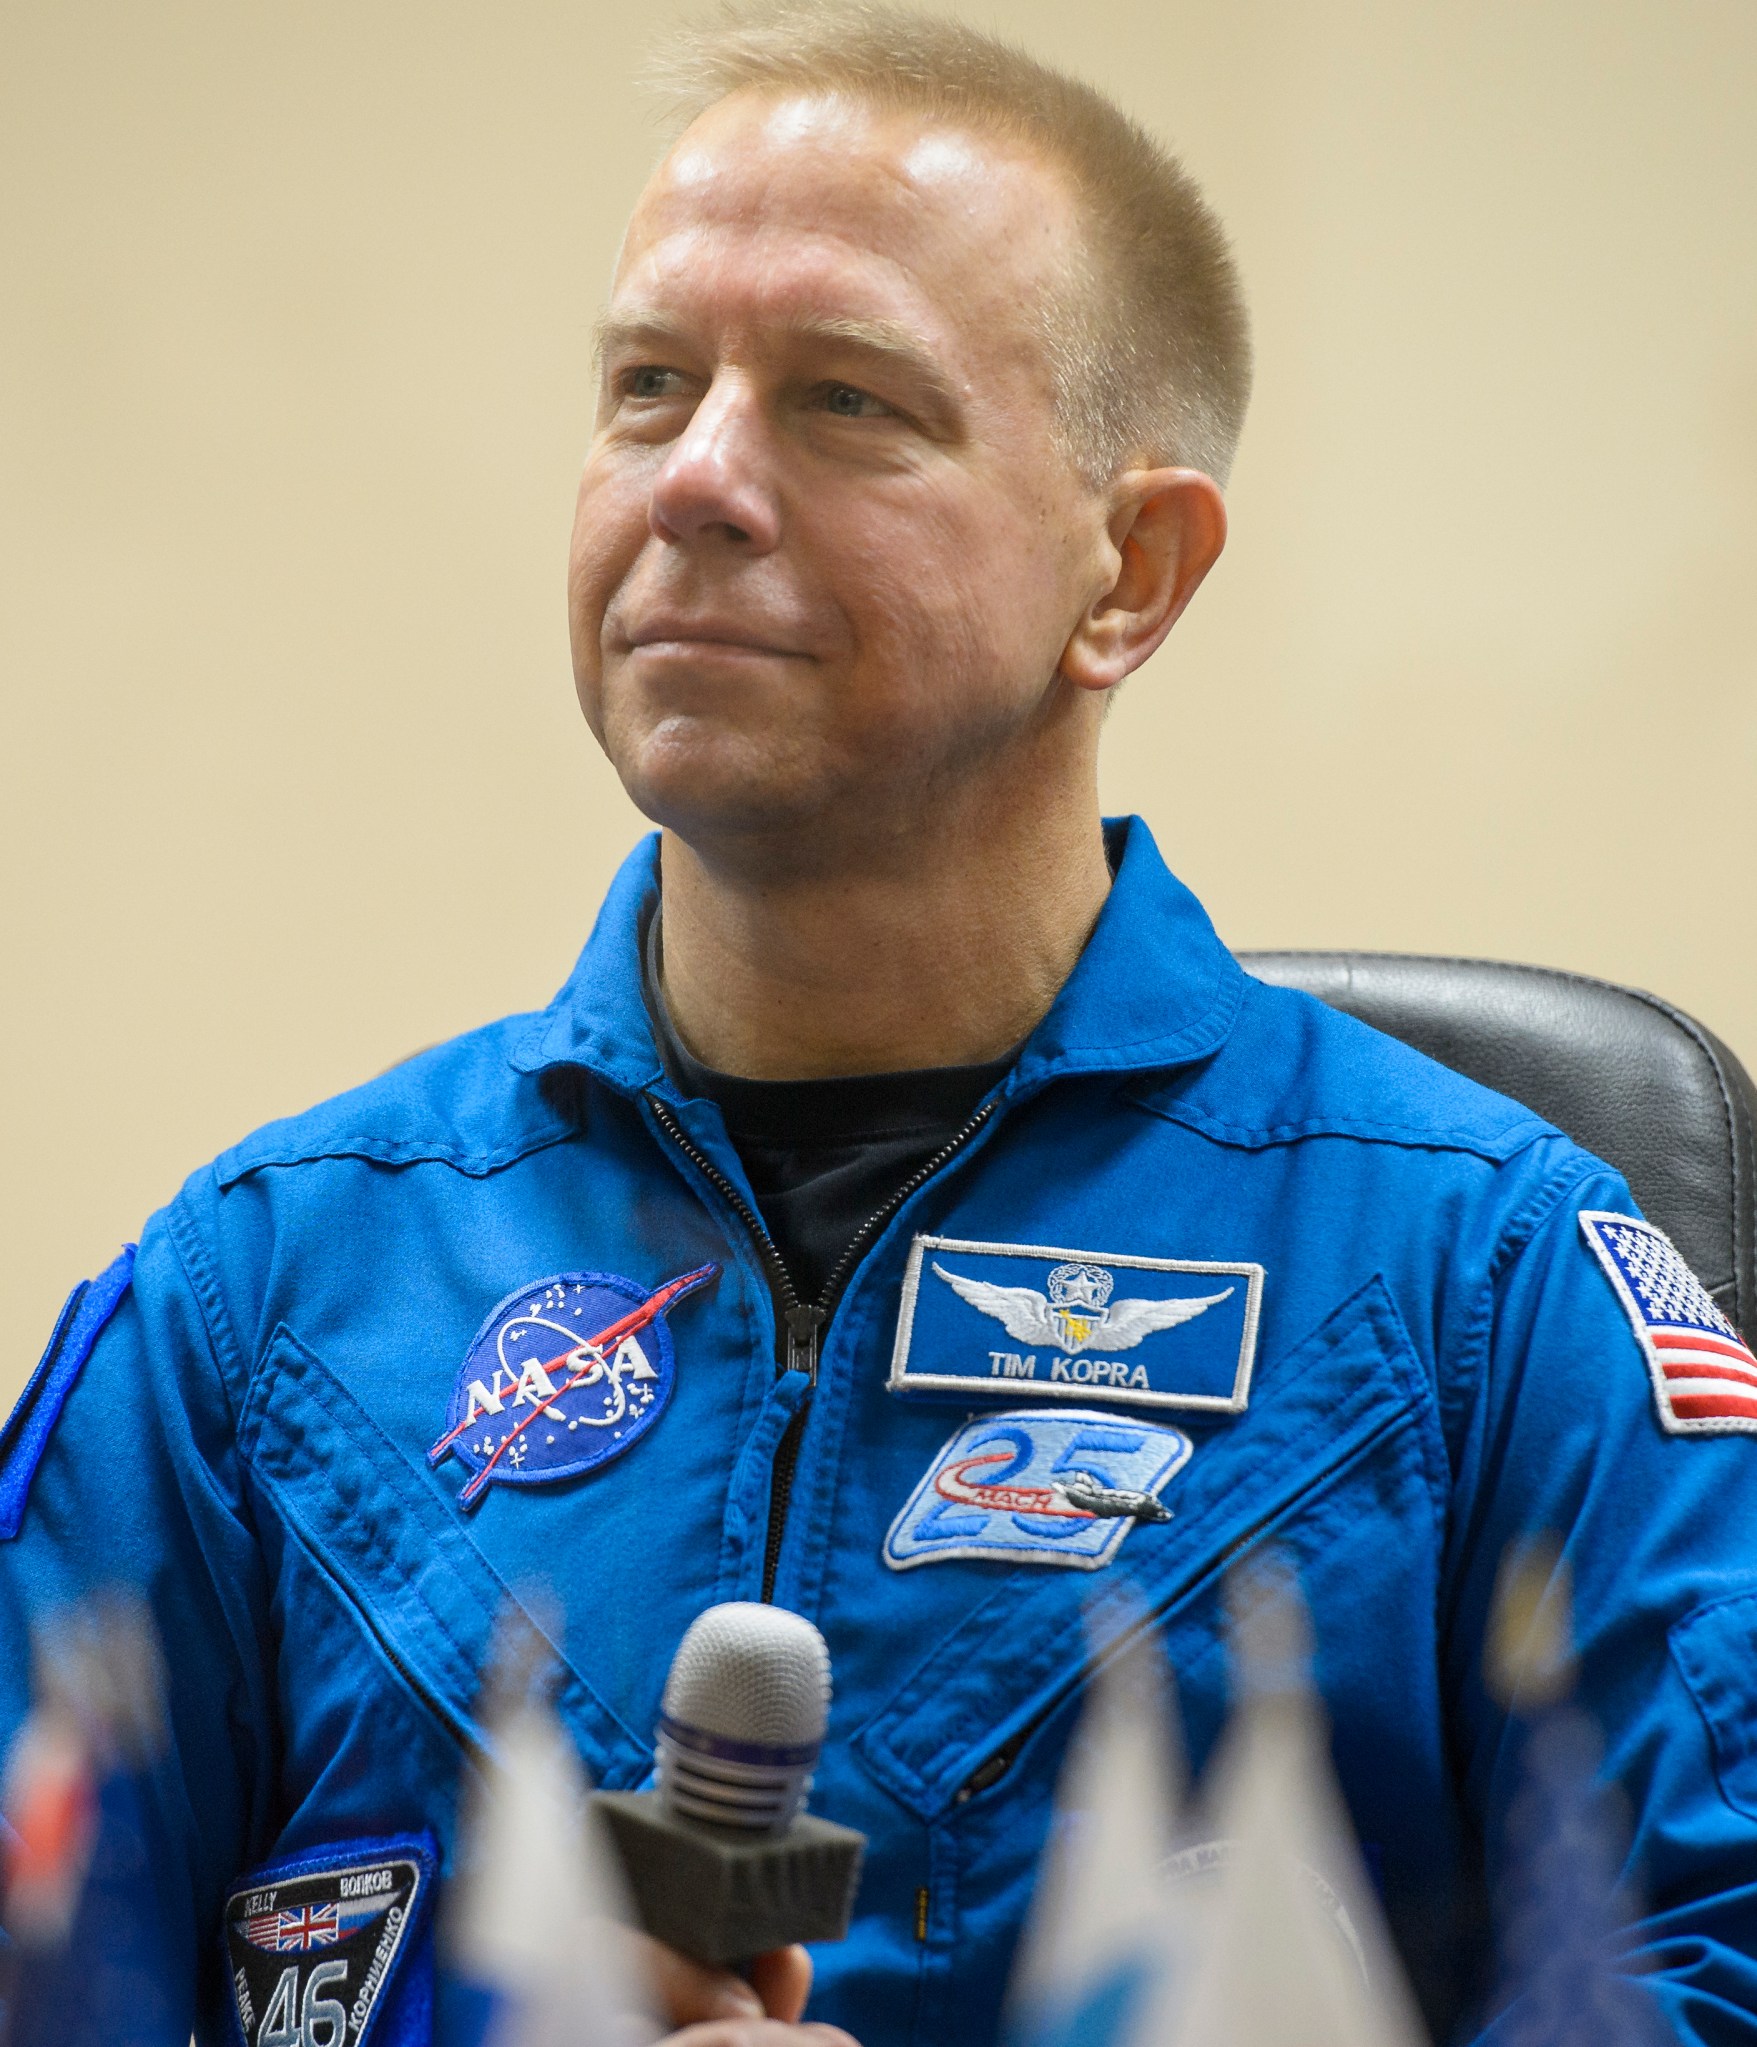 Expedition 46 Flight Engineer Tim Kopra of NASA